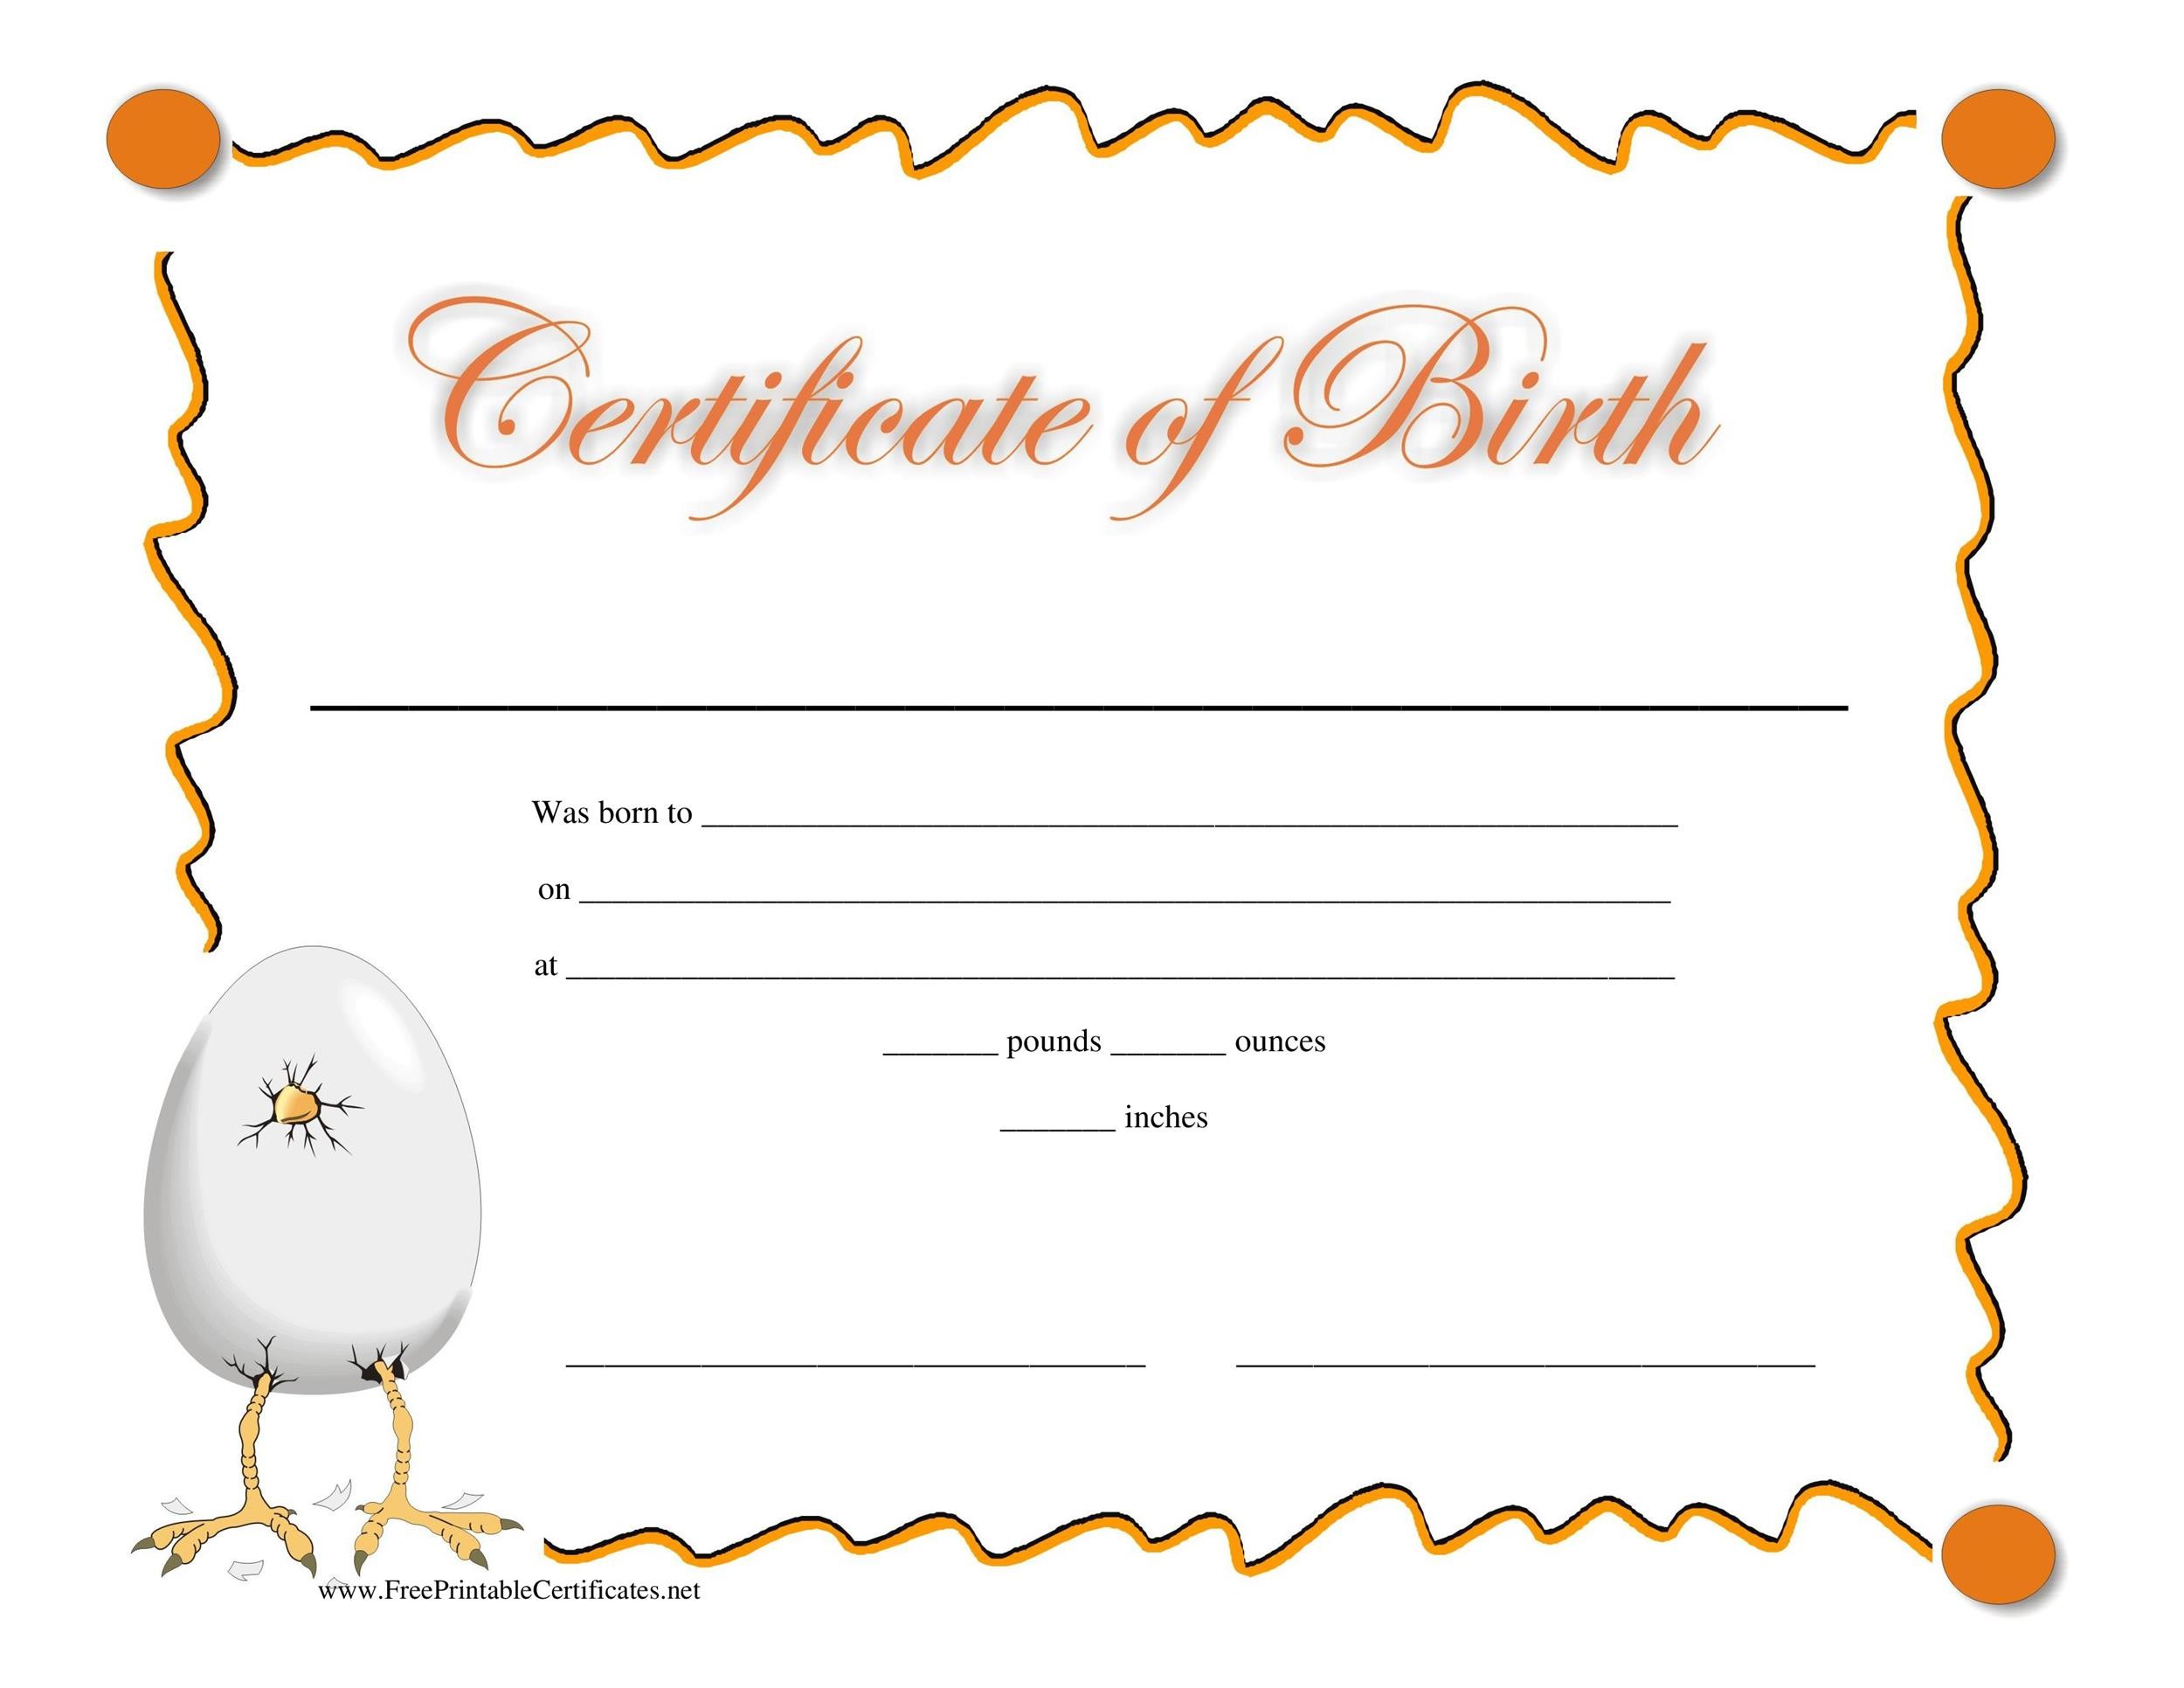 BIRTH CERTIFICATE - FAQ With Regard To Fake Birth Certificate Template